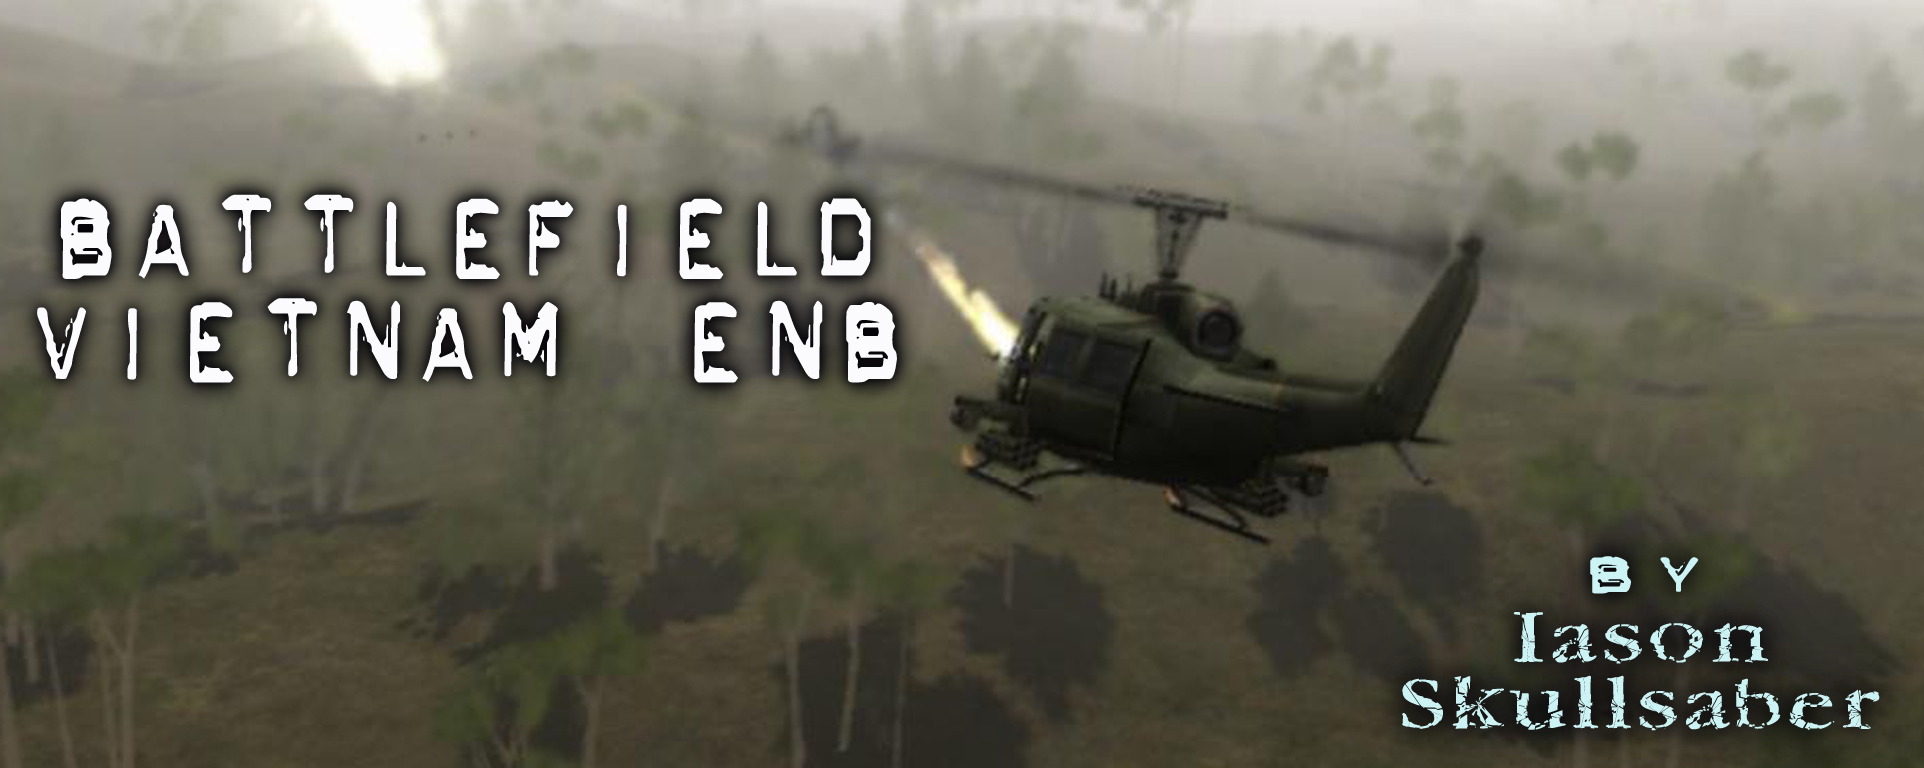 Battlefield vietnam free download